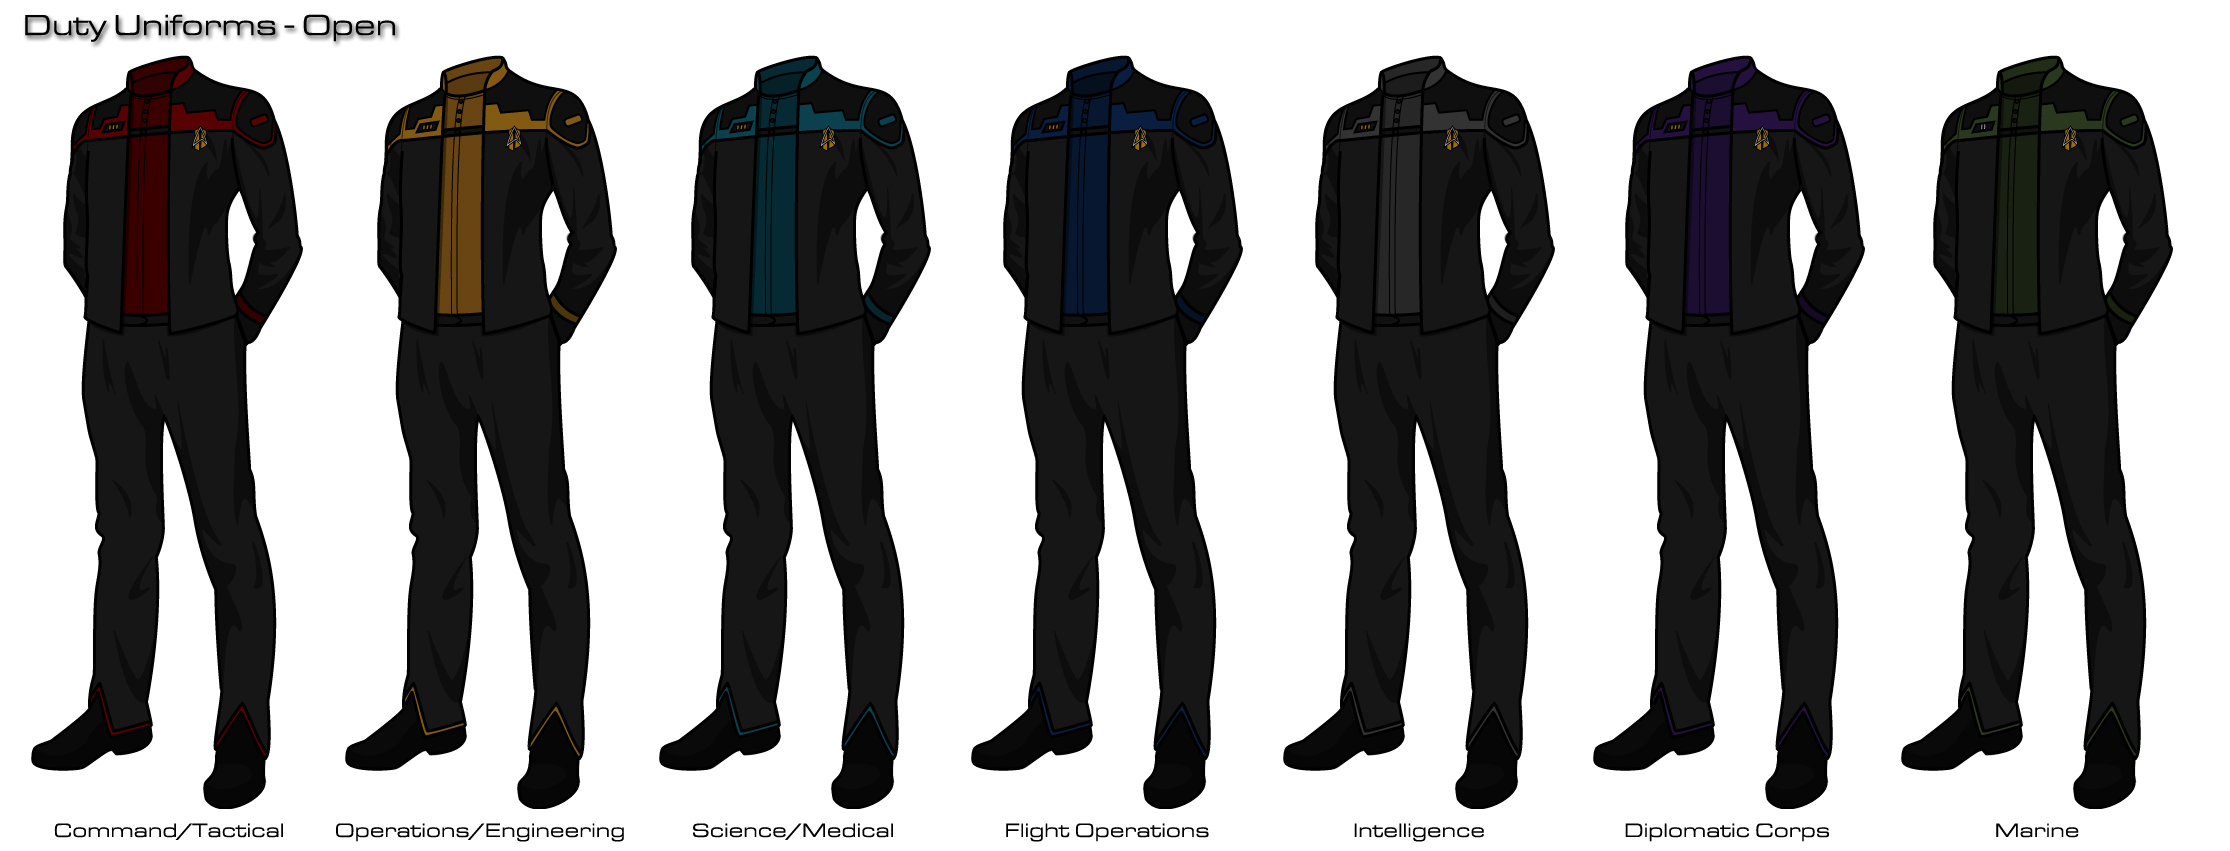 starfleet__2409__uniforms___duty_uniforms__open__by_haphazartgeek-d7blbco.jpg